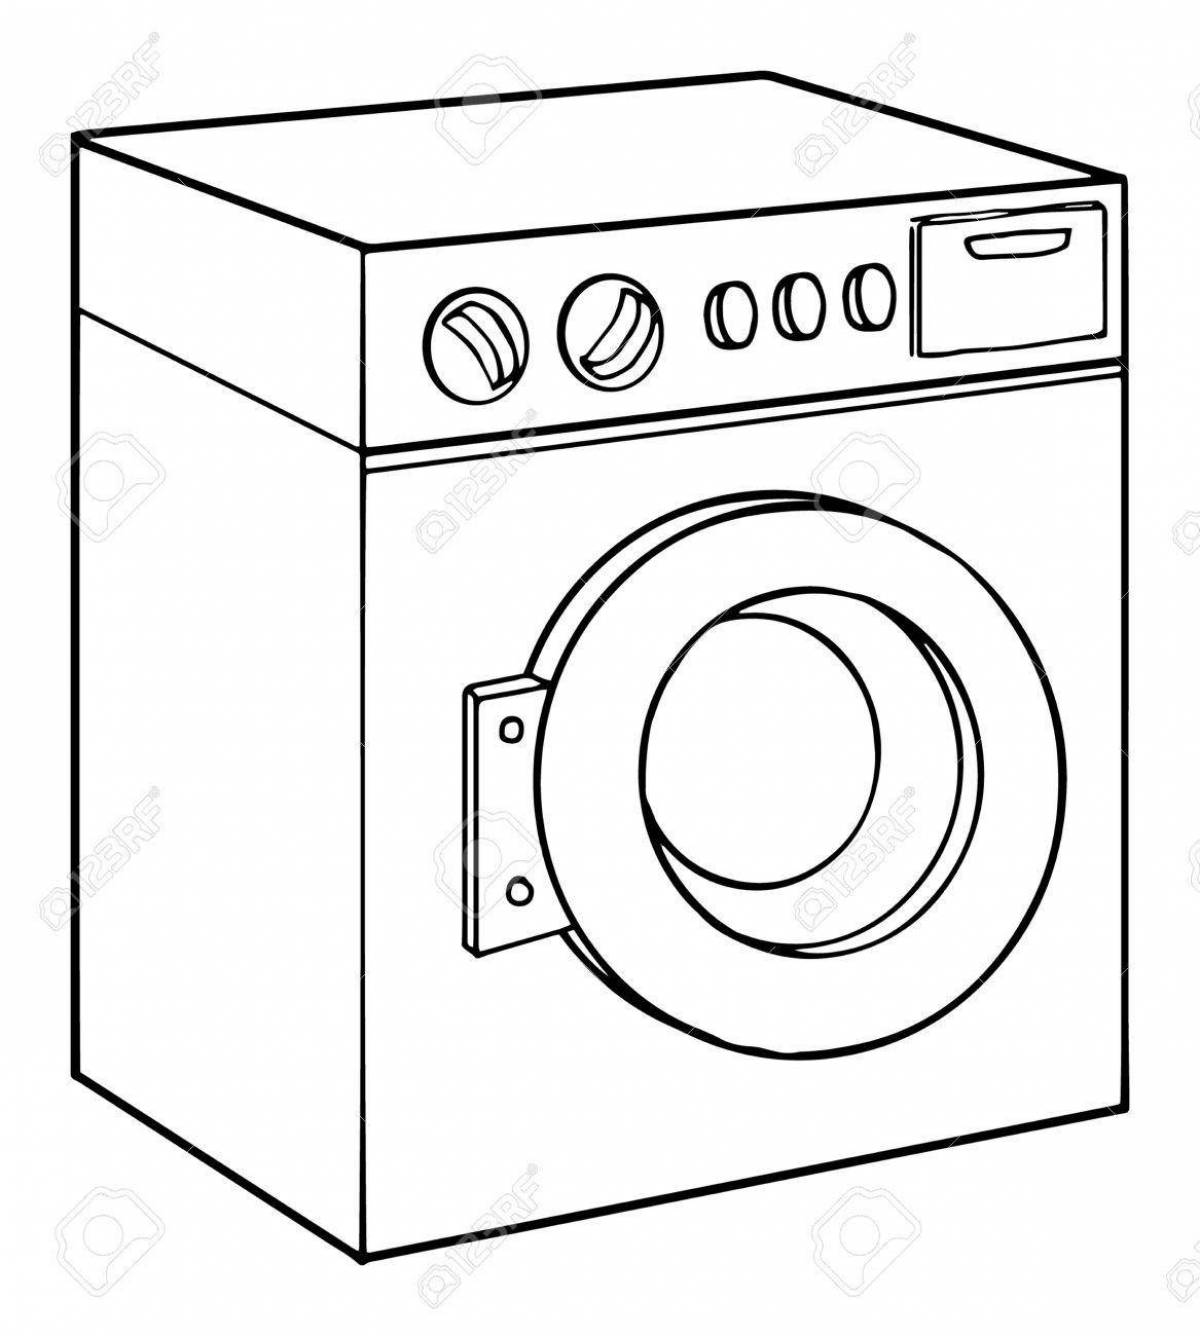 Incredible washing machine coloring page